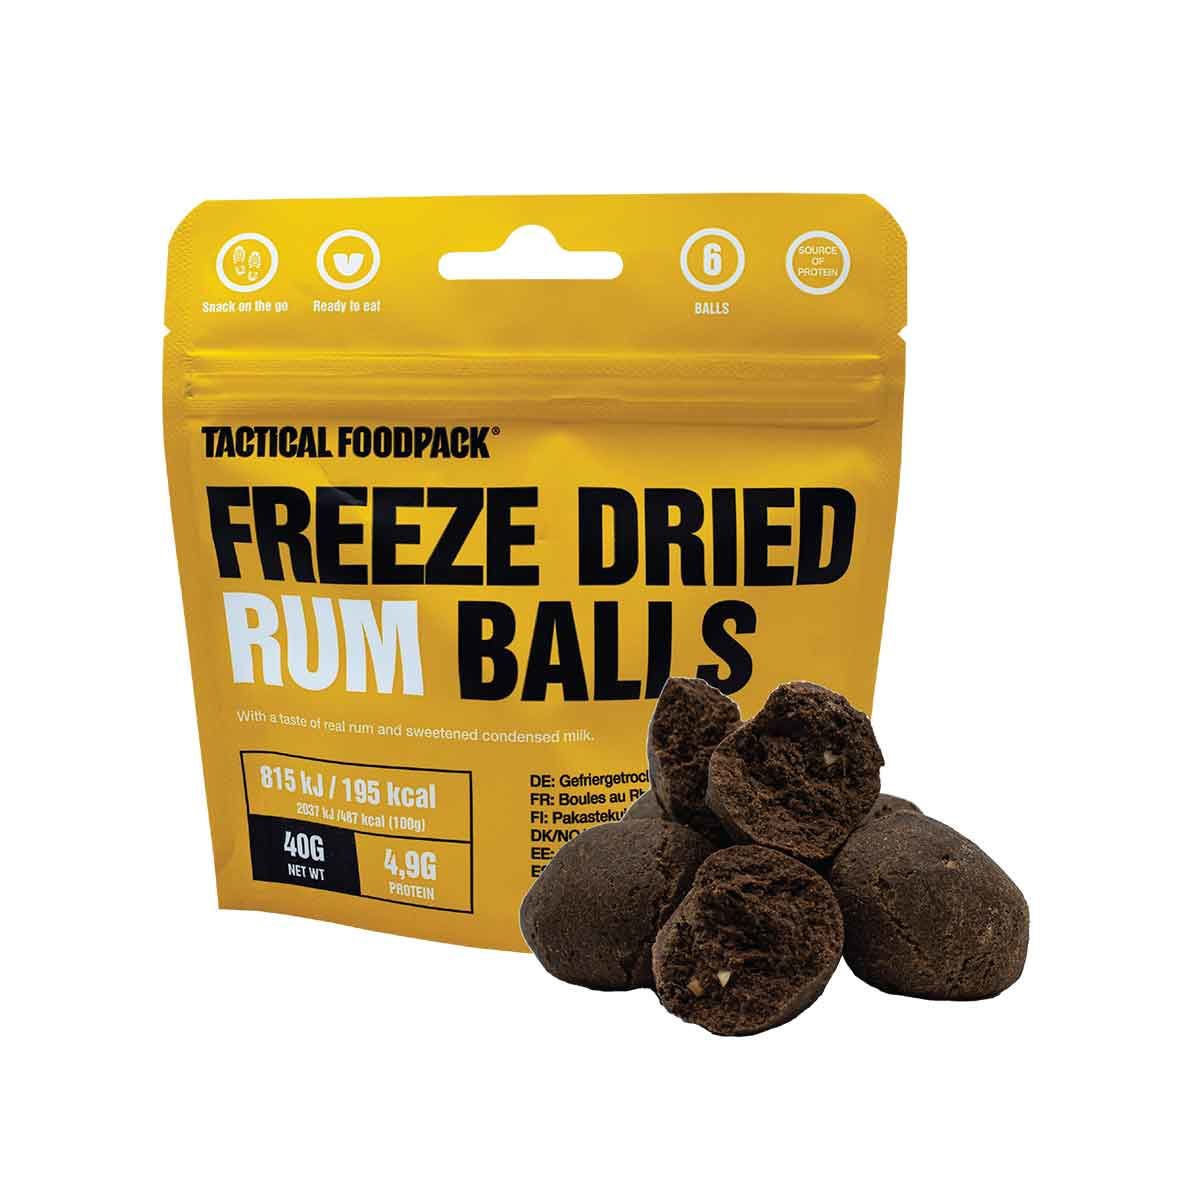 Tactical Foodpack Freeze dried rum balls